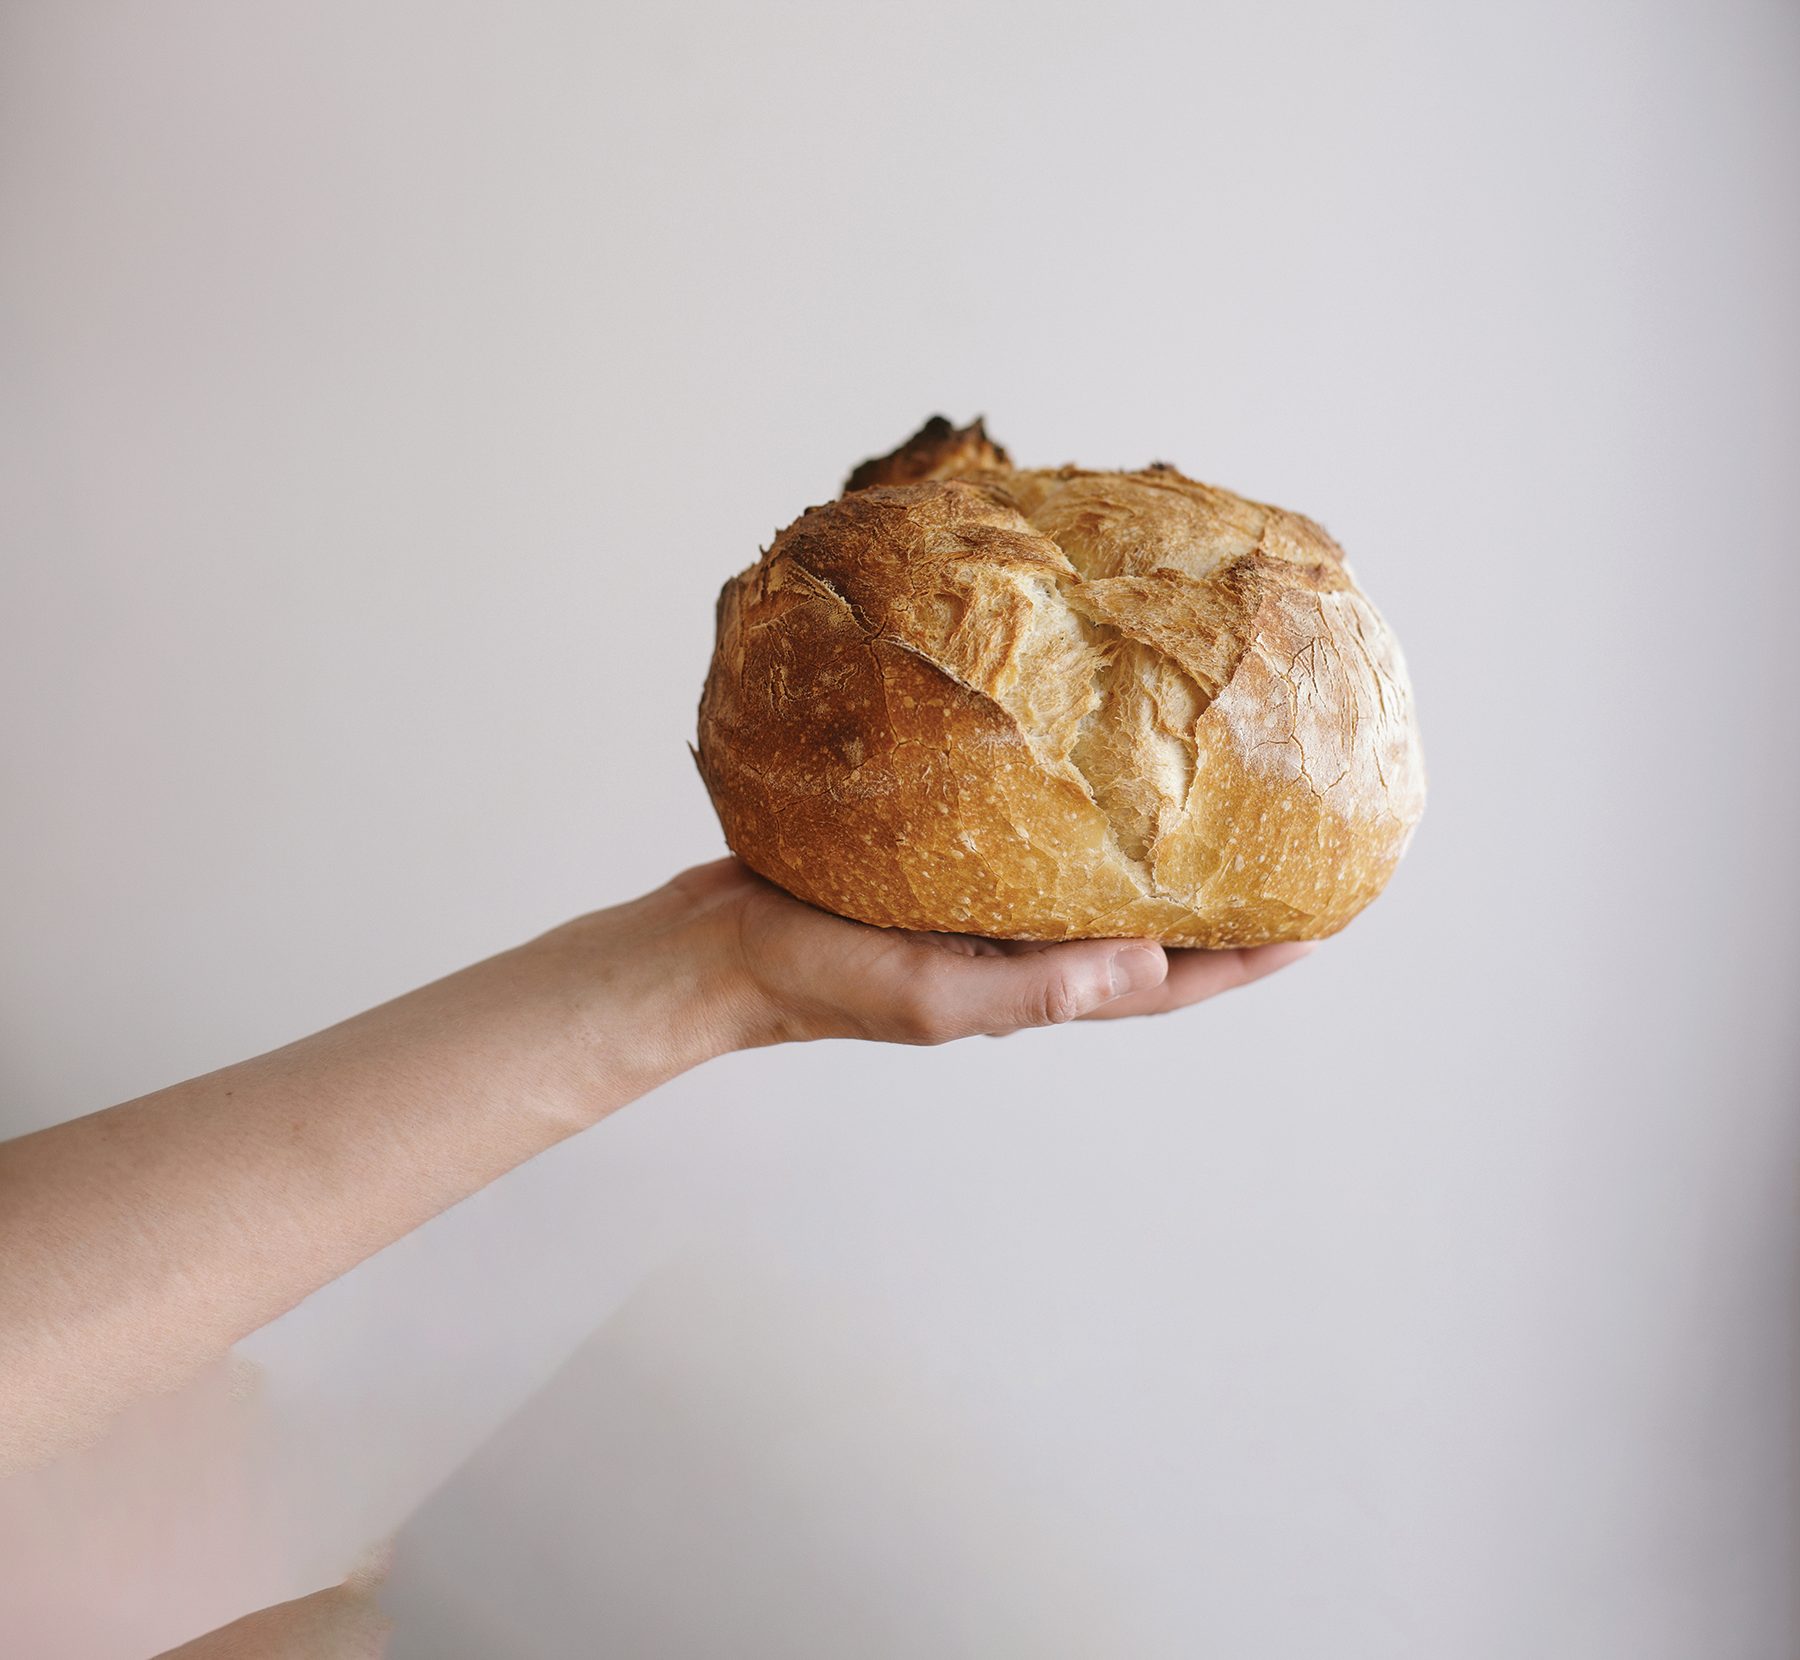 Graham bread, Food, Ingredient, Gesture, Hand, Arm holding bread